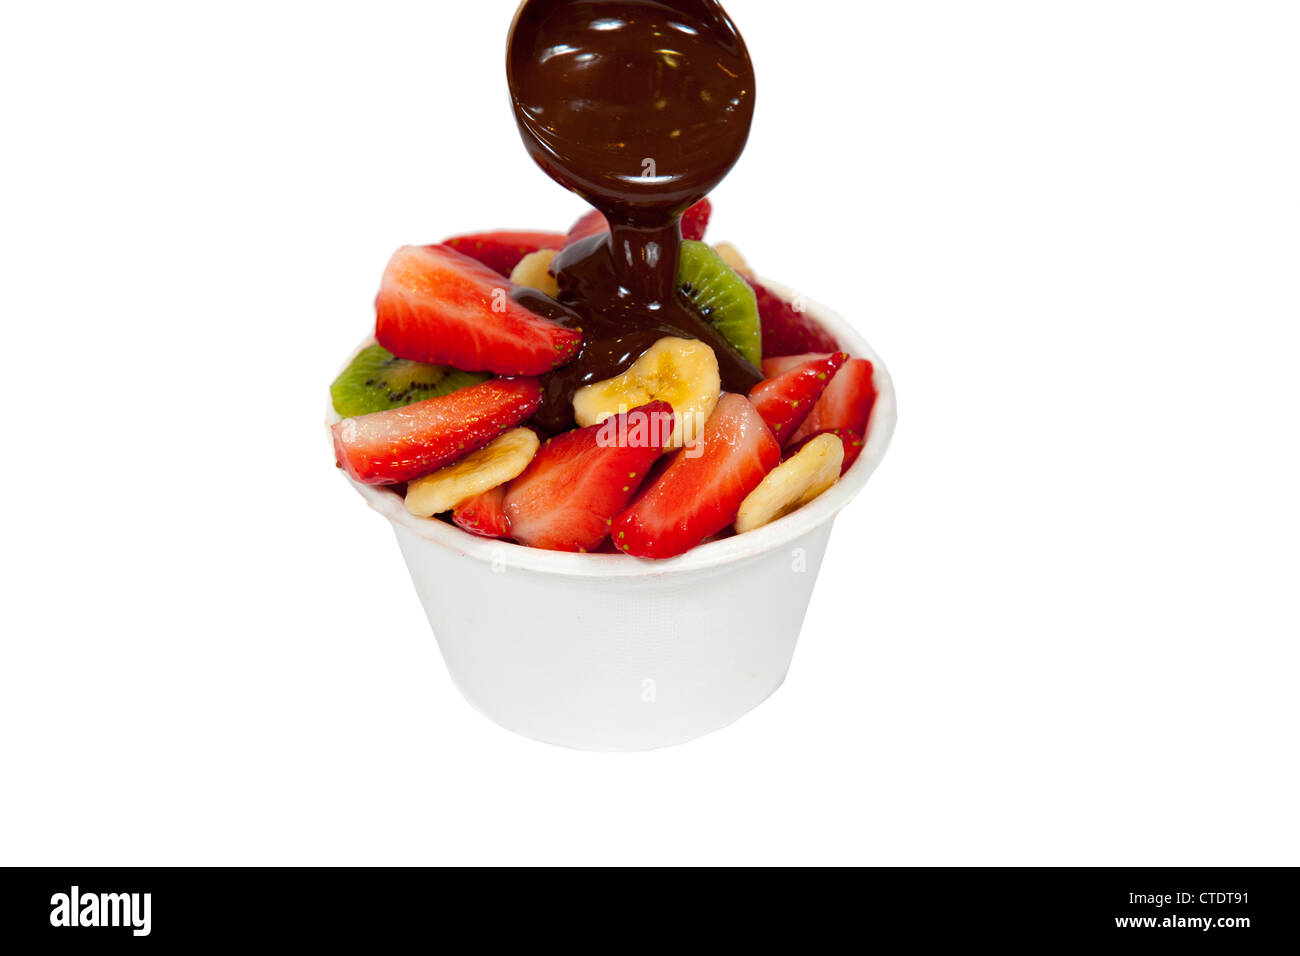 Fruit salad with chocolate sauce Stock Photo